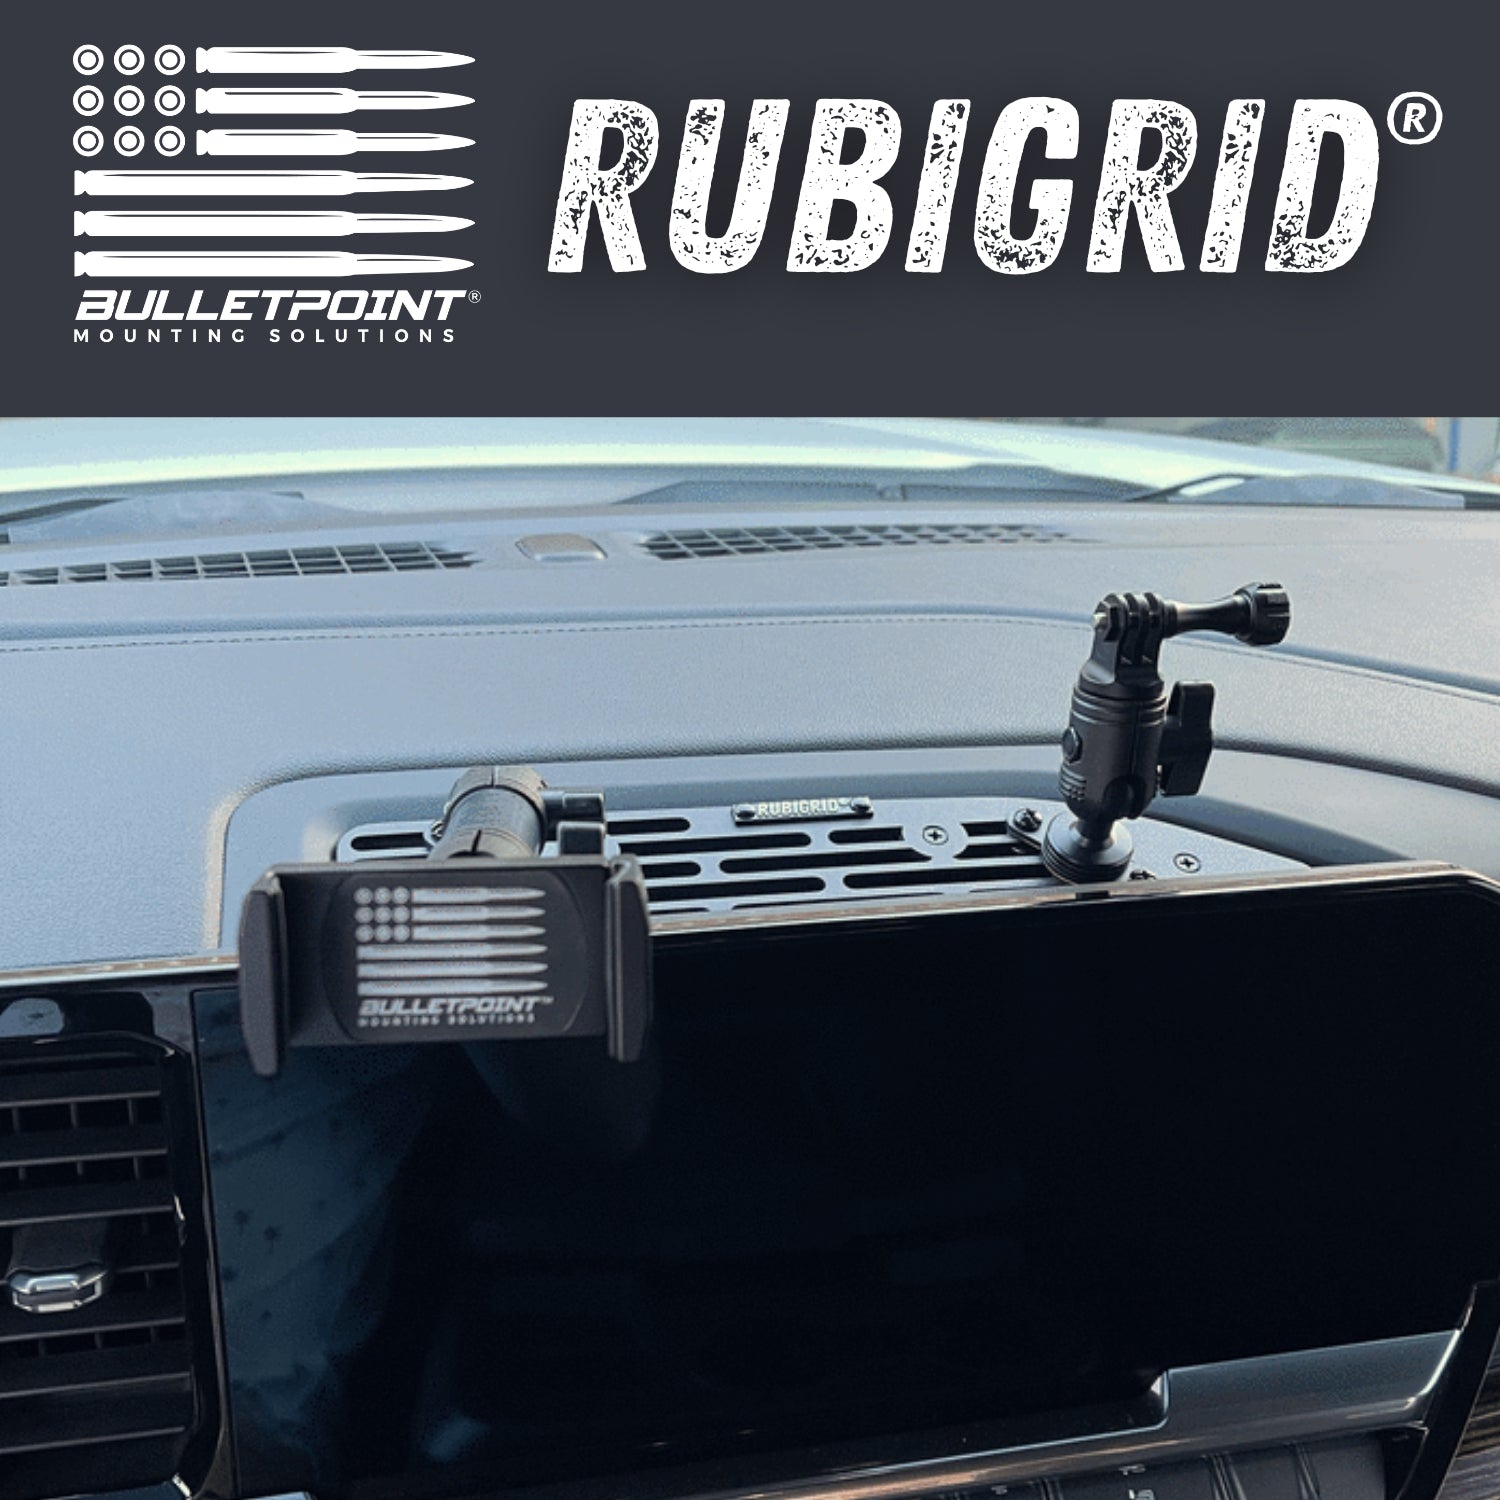 RubiGrid® 2022+ GMC Sierra + Chevrolet Silverado Dash Mount 13.4" Screen